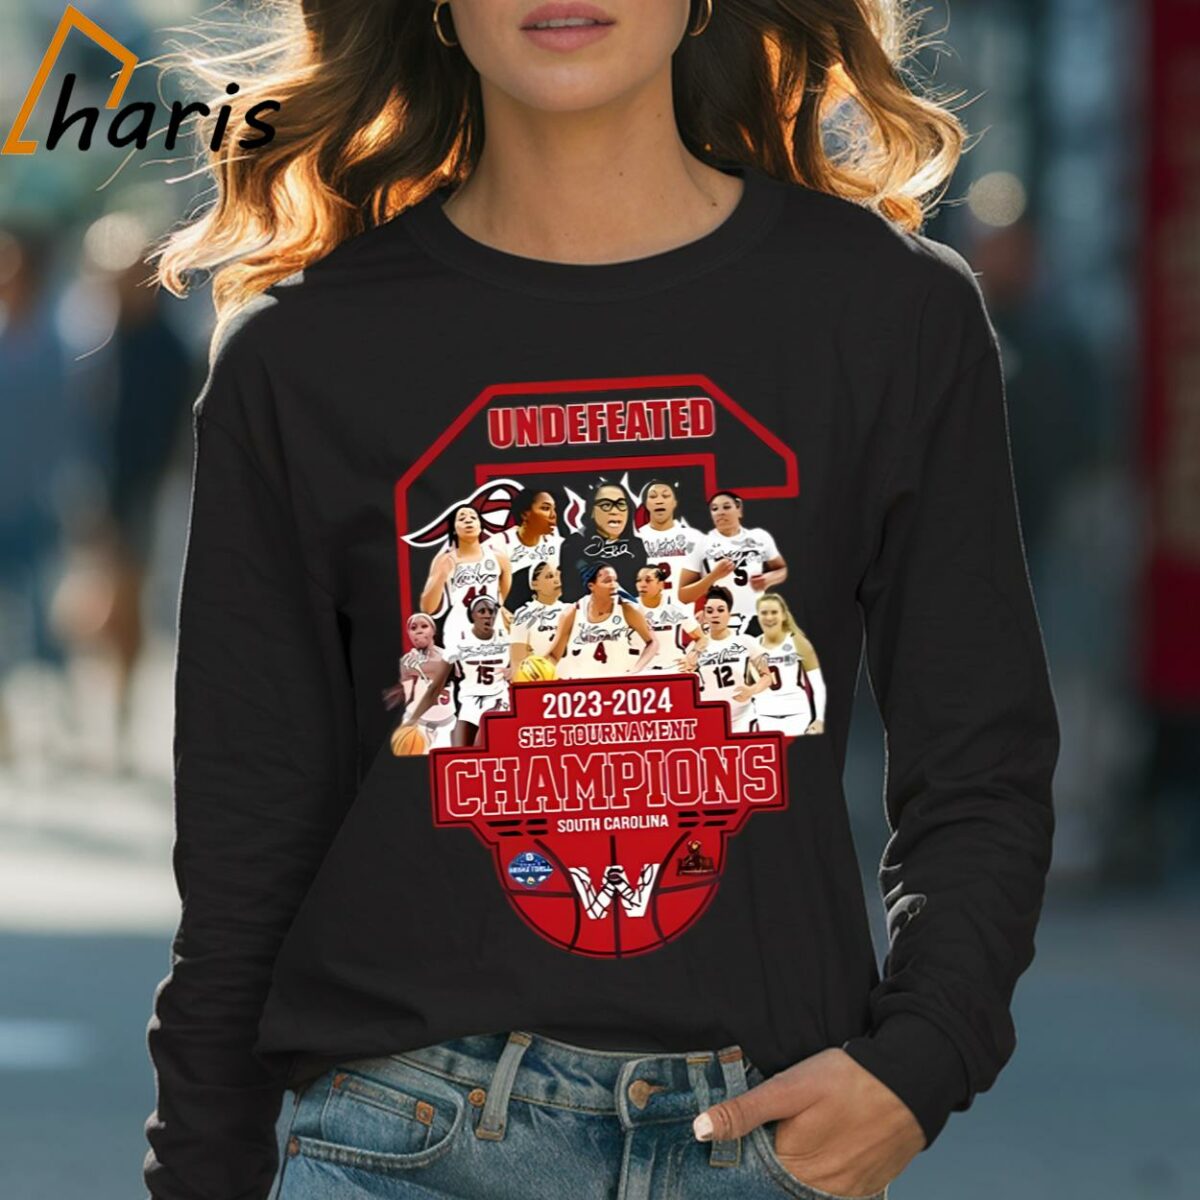 South Carolina Gamecocks NCAA Womens Basketball Tournament Champions 2023 2024 Shirt 4 Long sleeve shirt